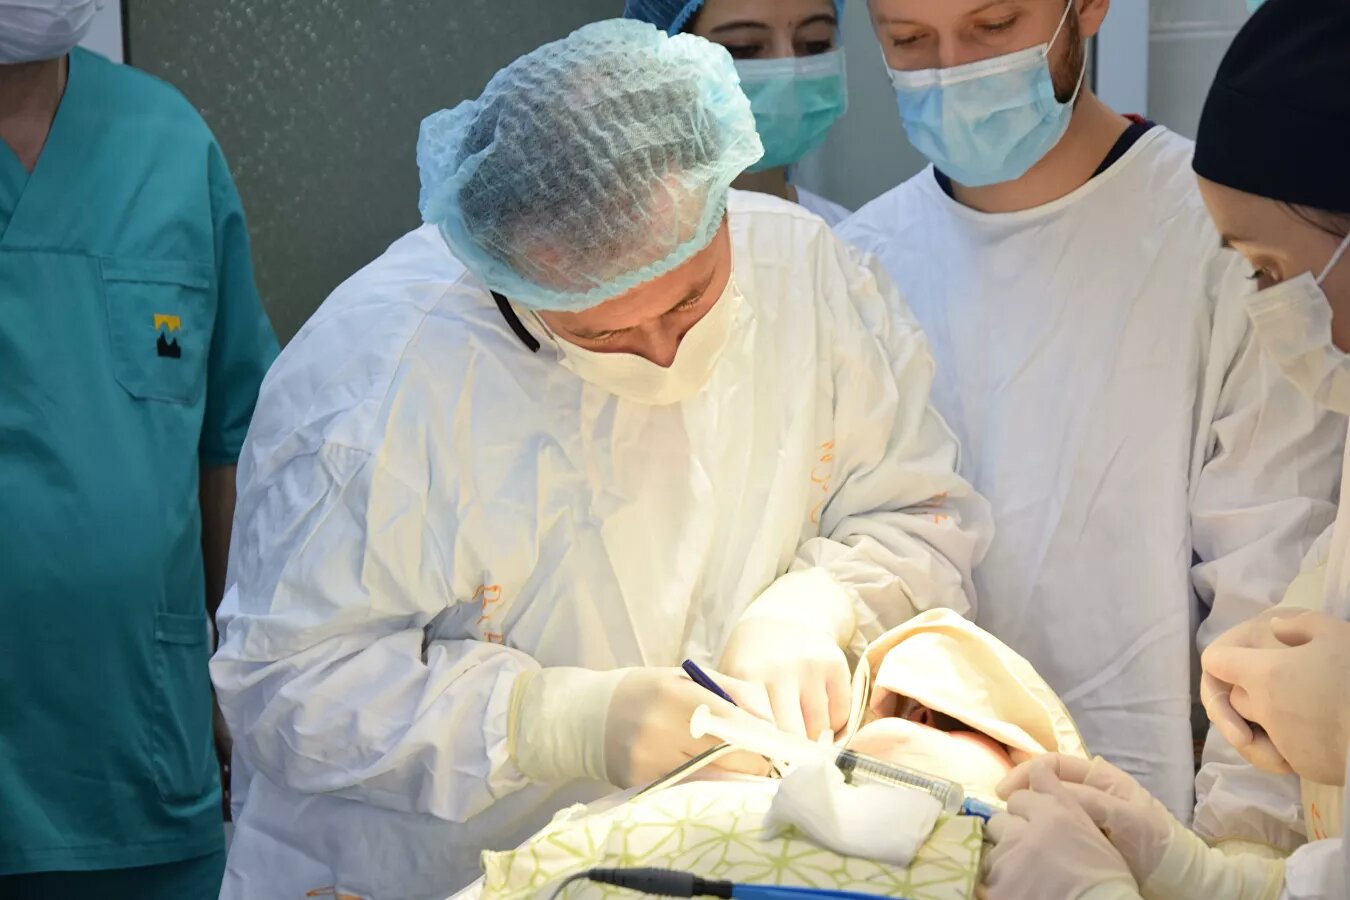 Chirurgul din Moldova care a scris istorie: A restabilit mandibula cu os de la picior